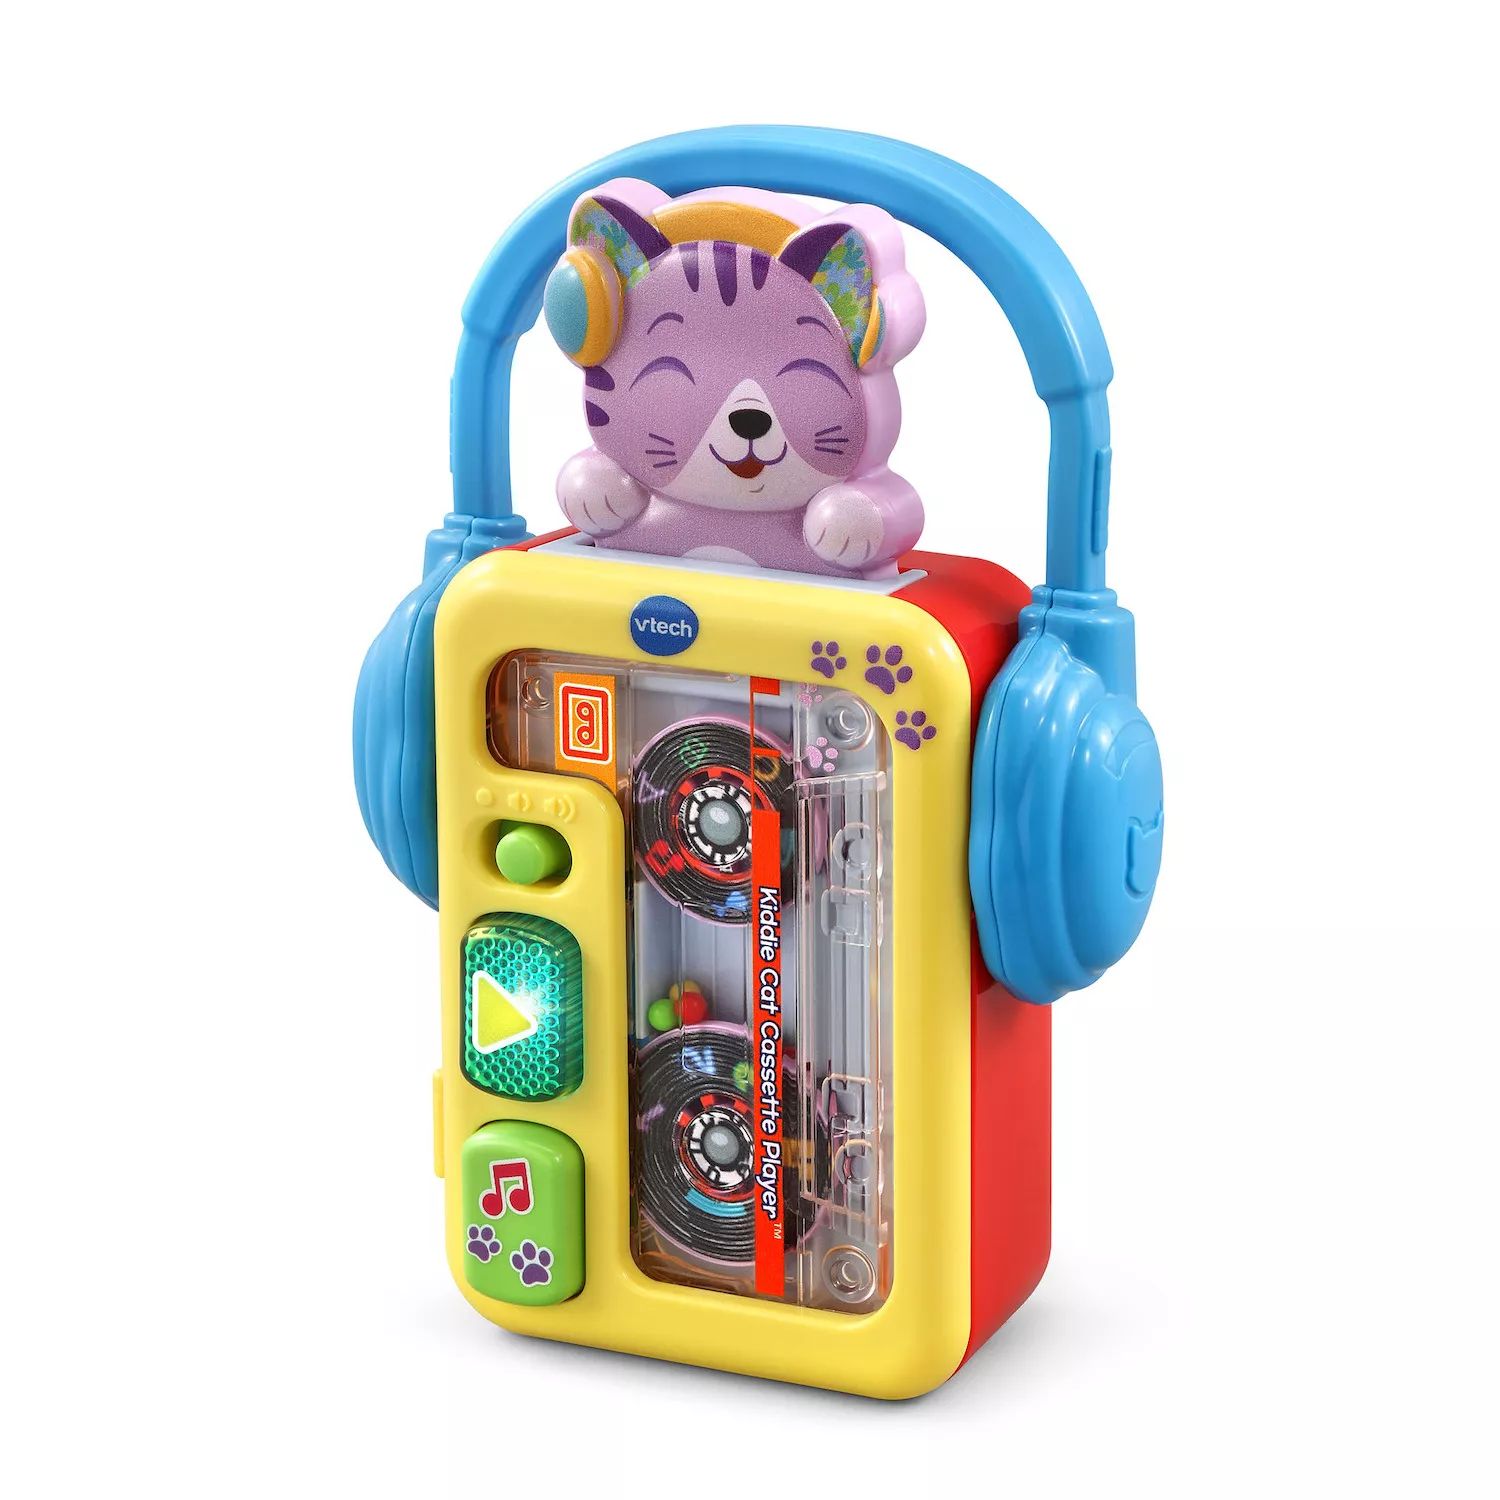 Игрушка-кассетный плеер VTech Kiddie Cat VTech